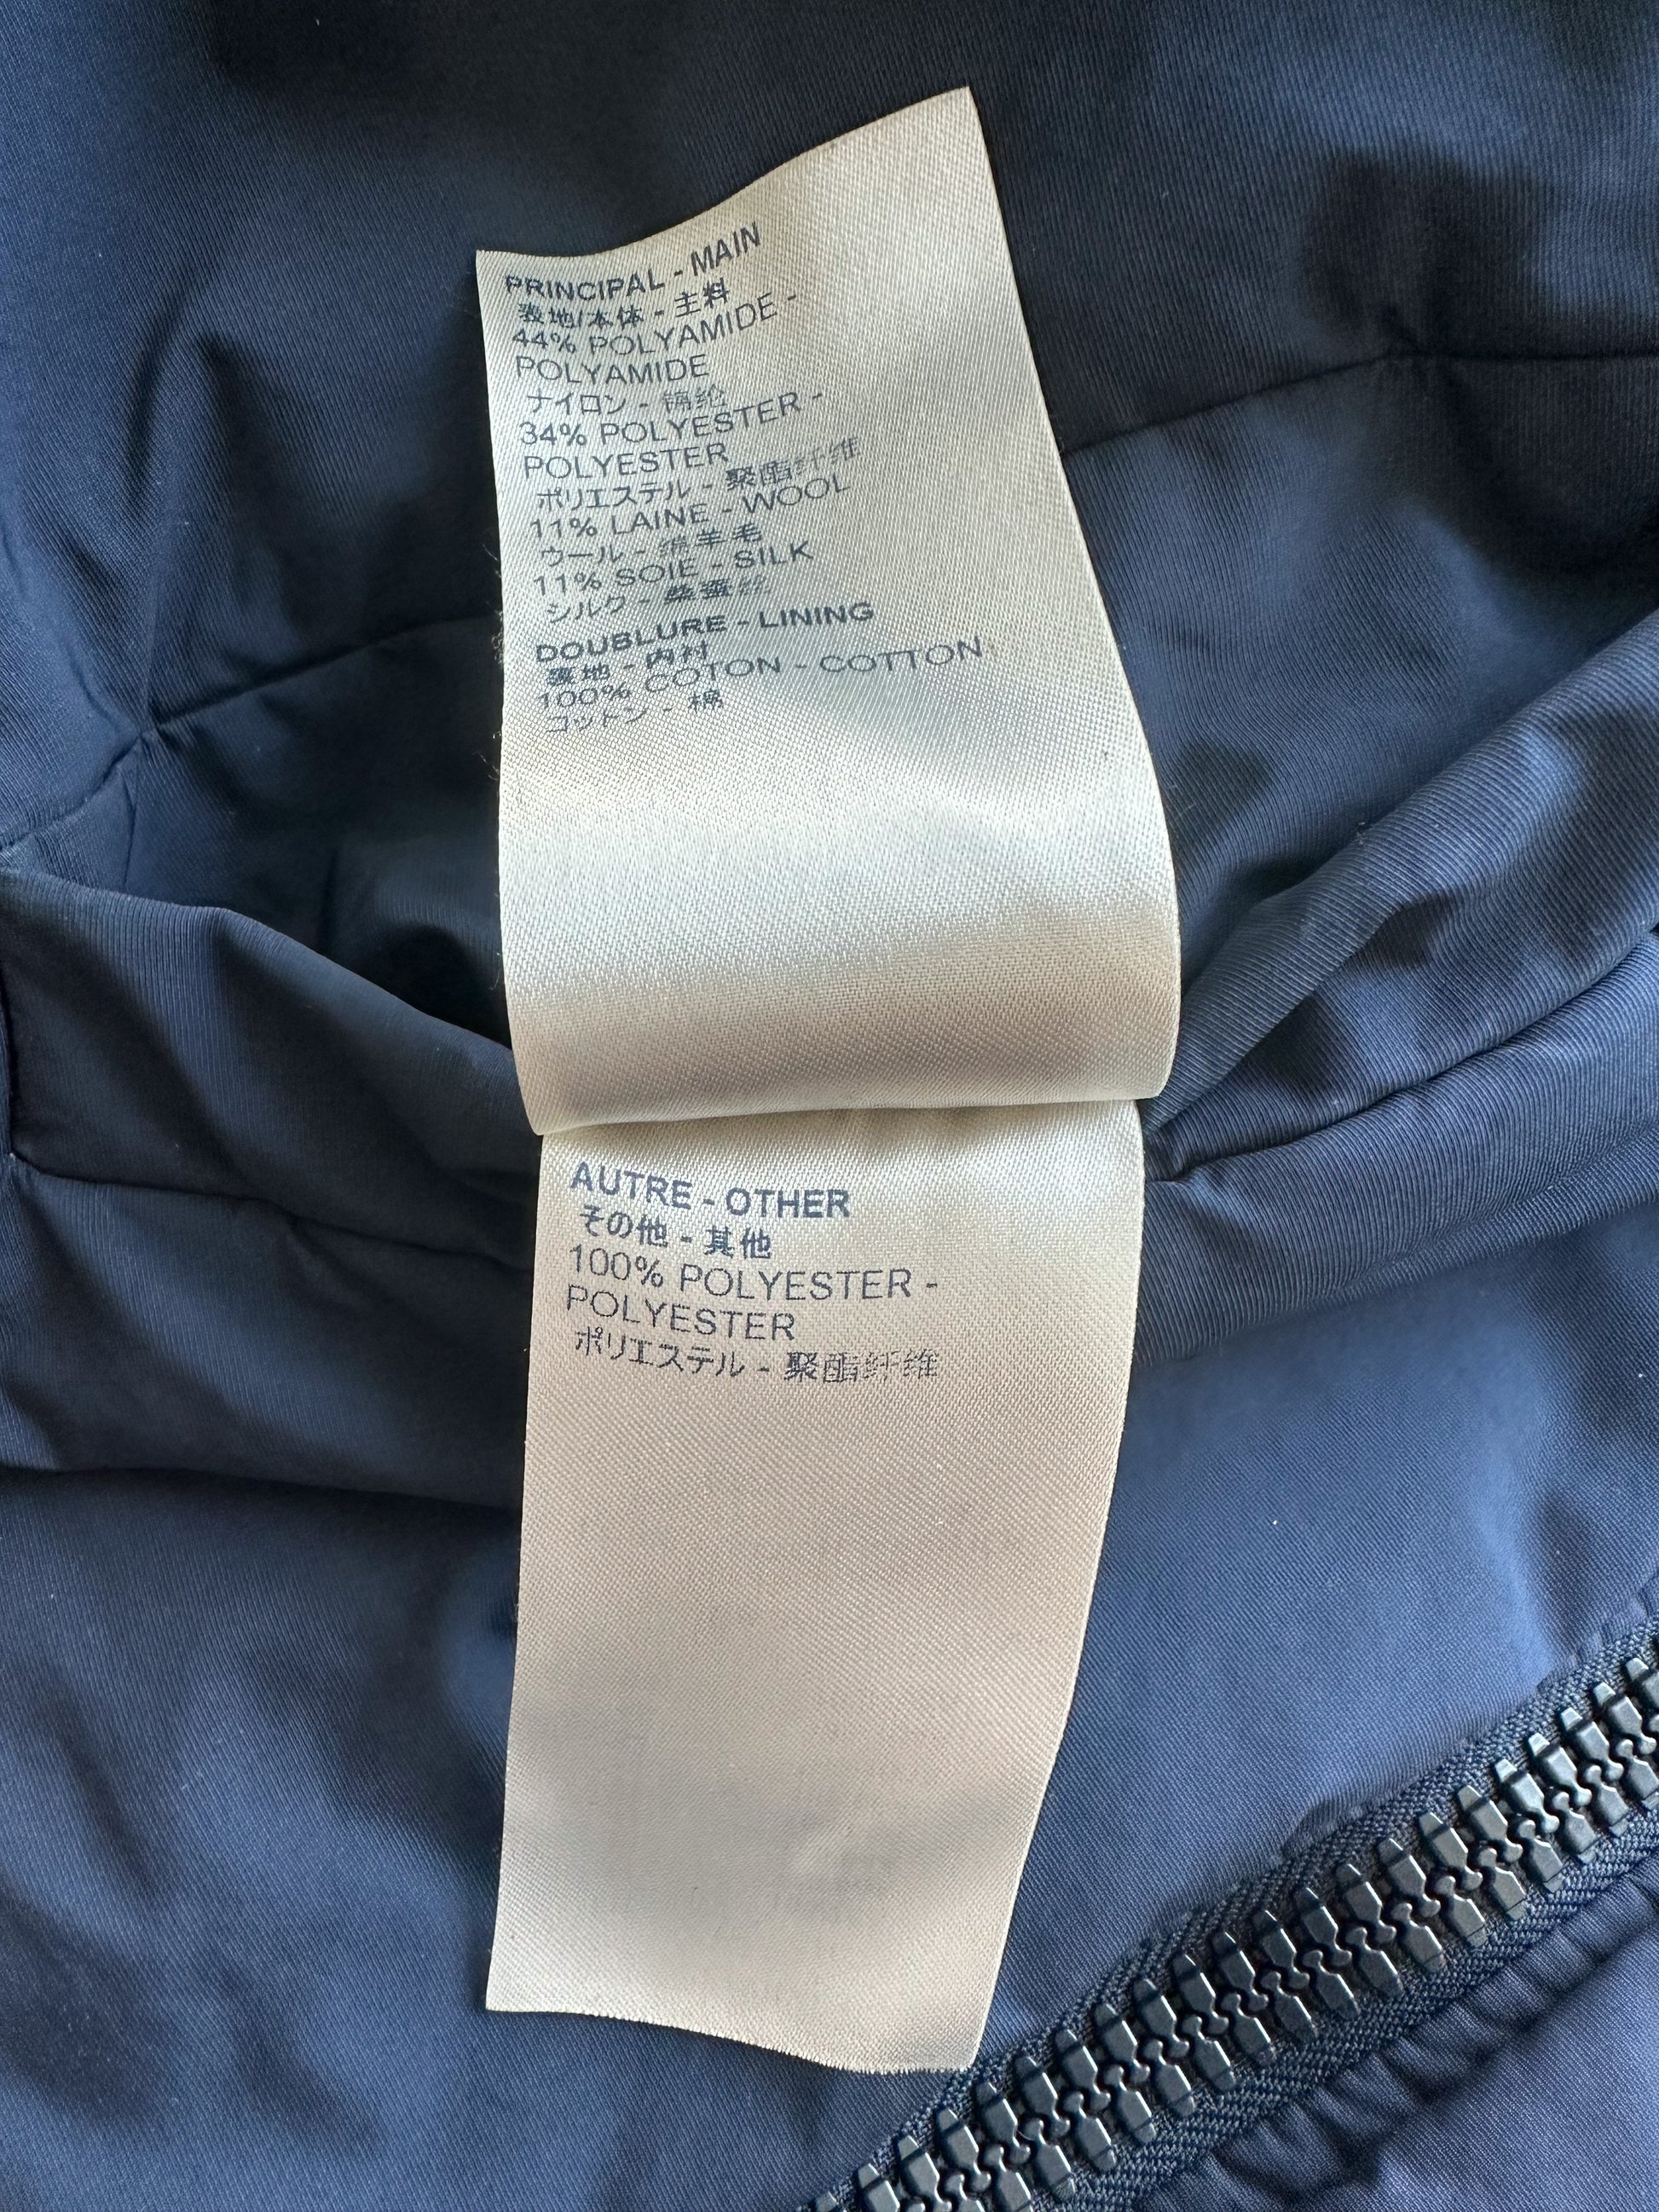 Louis Vuitton Reversible Blue Camouflage Monogram Padded Jacket –  CnExclusives